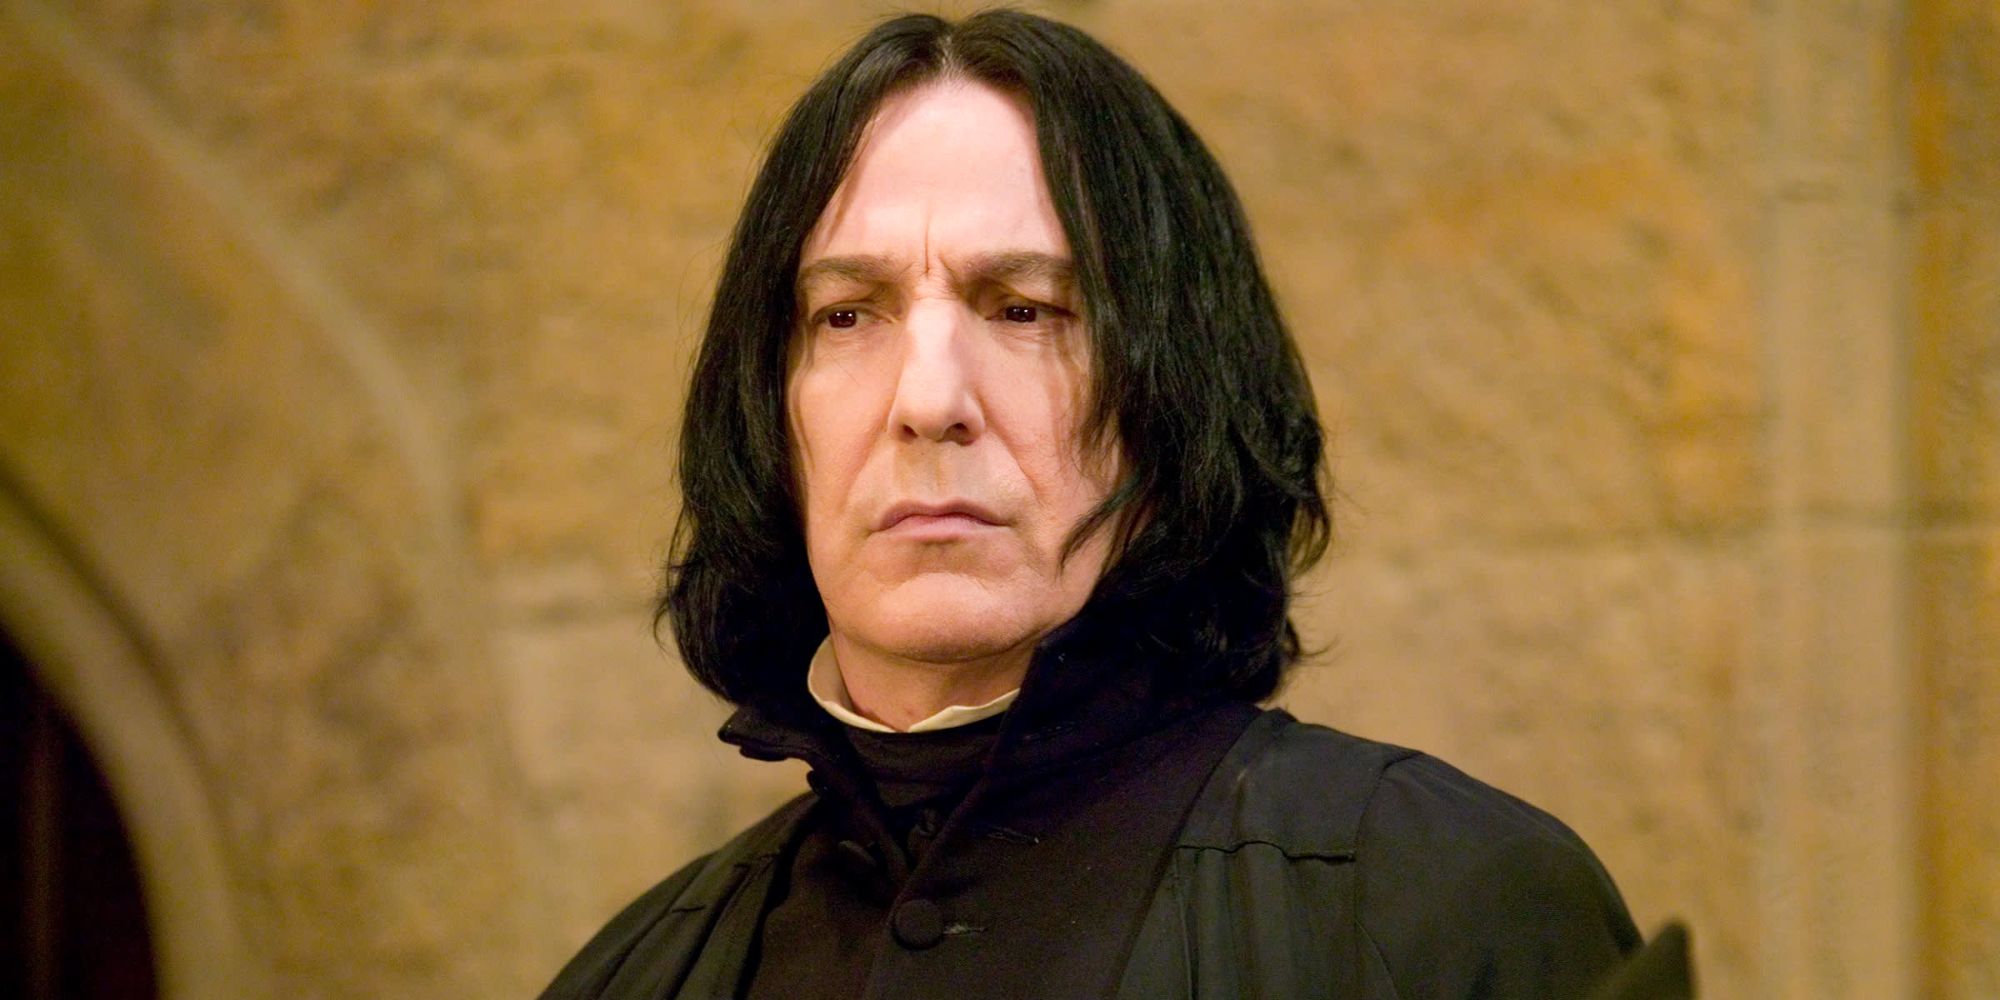 Harry Potter Alan Rickman as Severus Snape